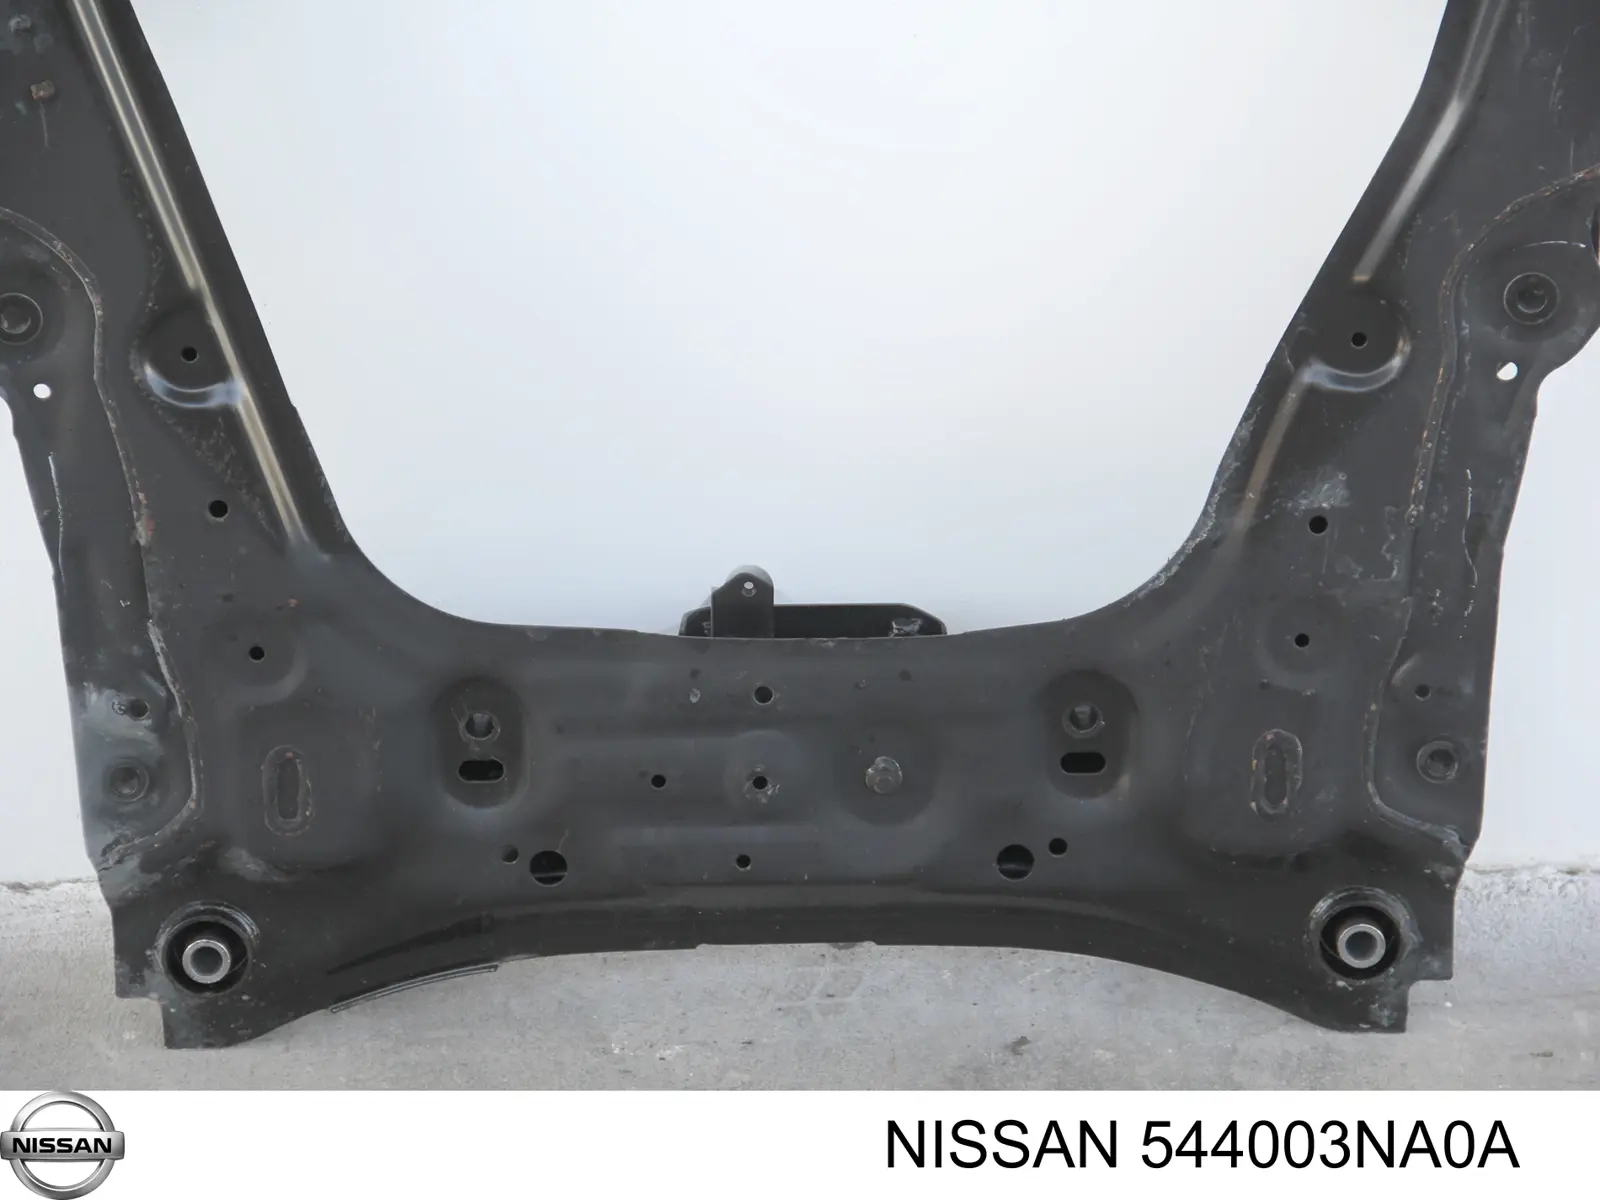 544003NK0A Nissan балка передней подвески (подрамник)